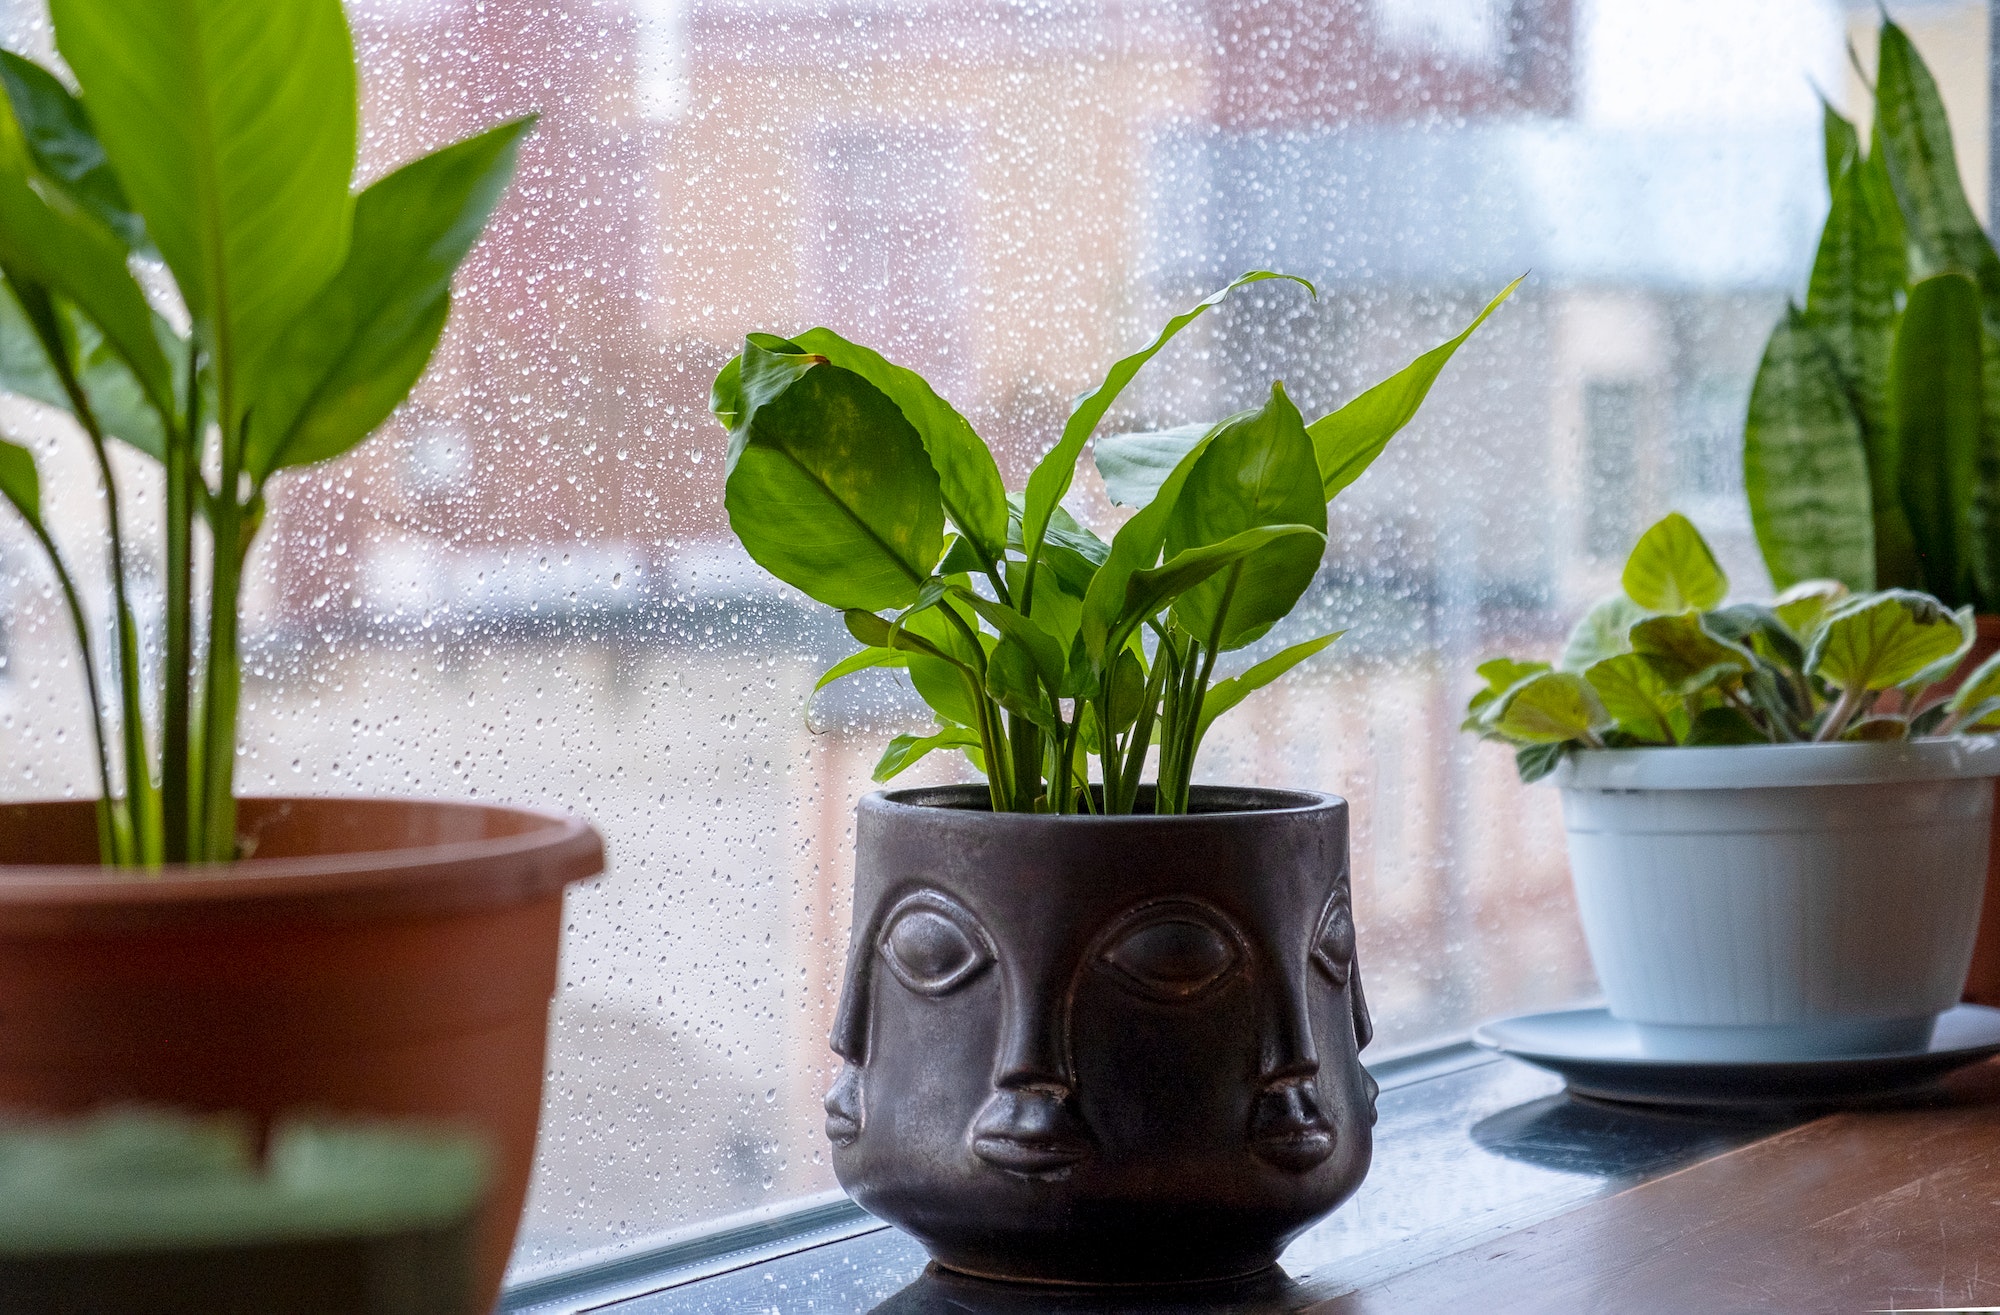 Flower pots with indoor plants are on windowsill. It is raining outside window.